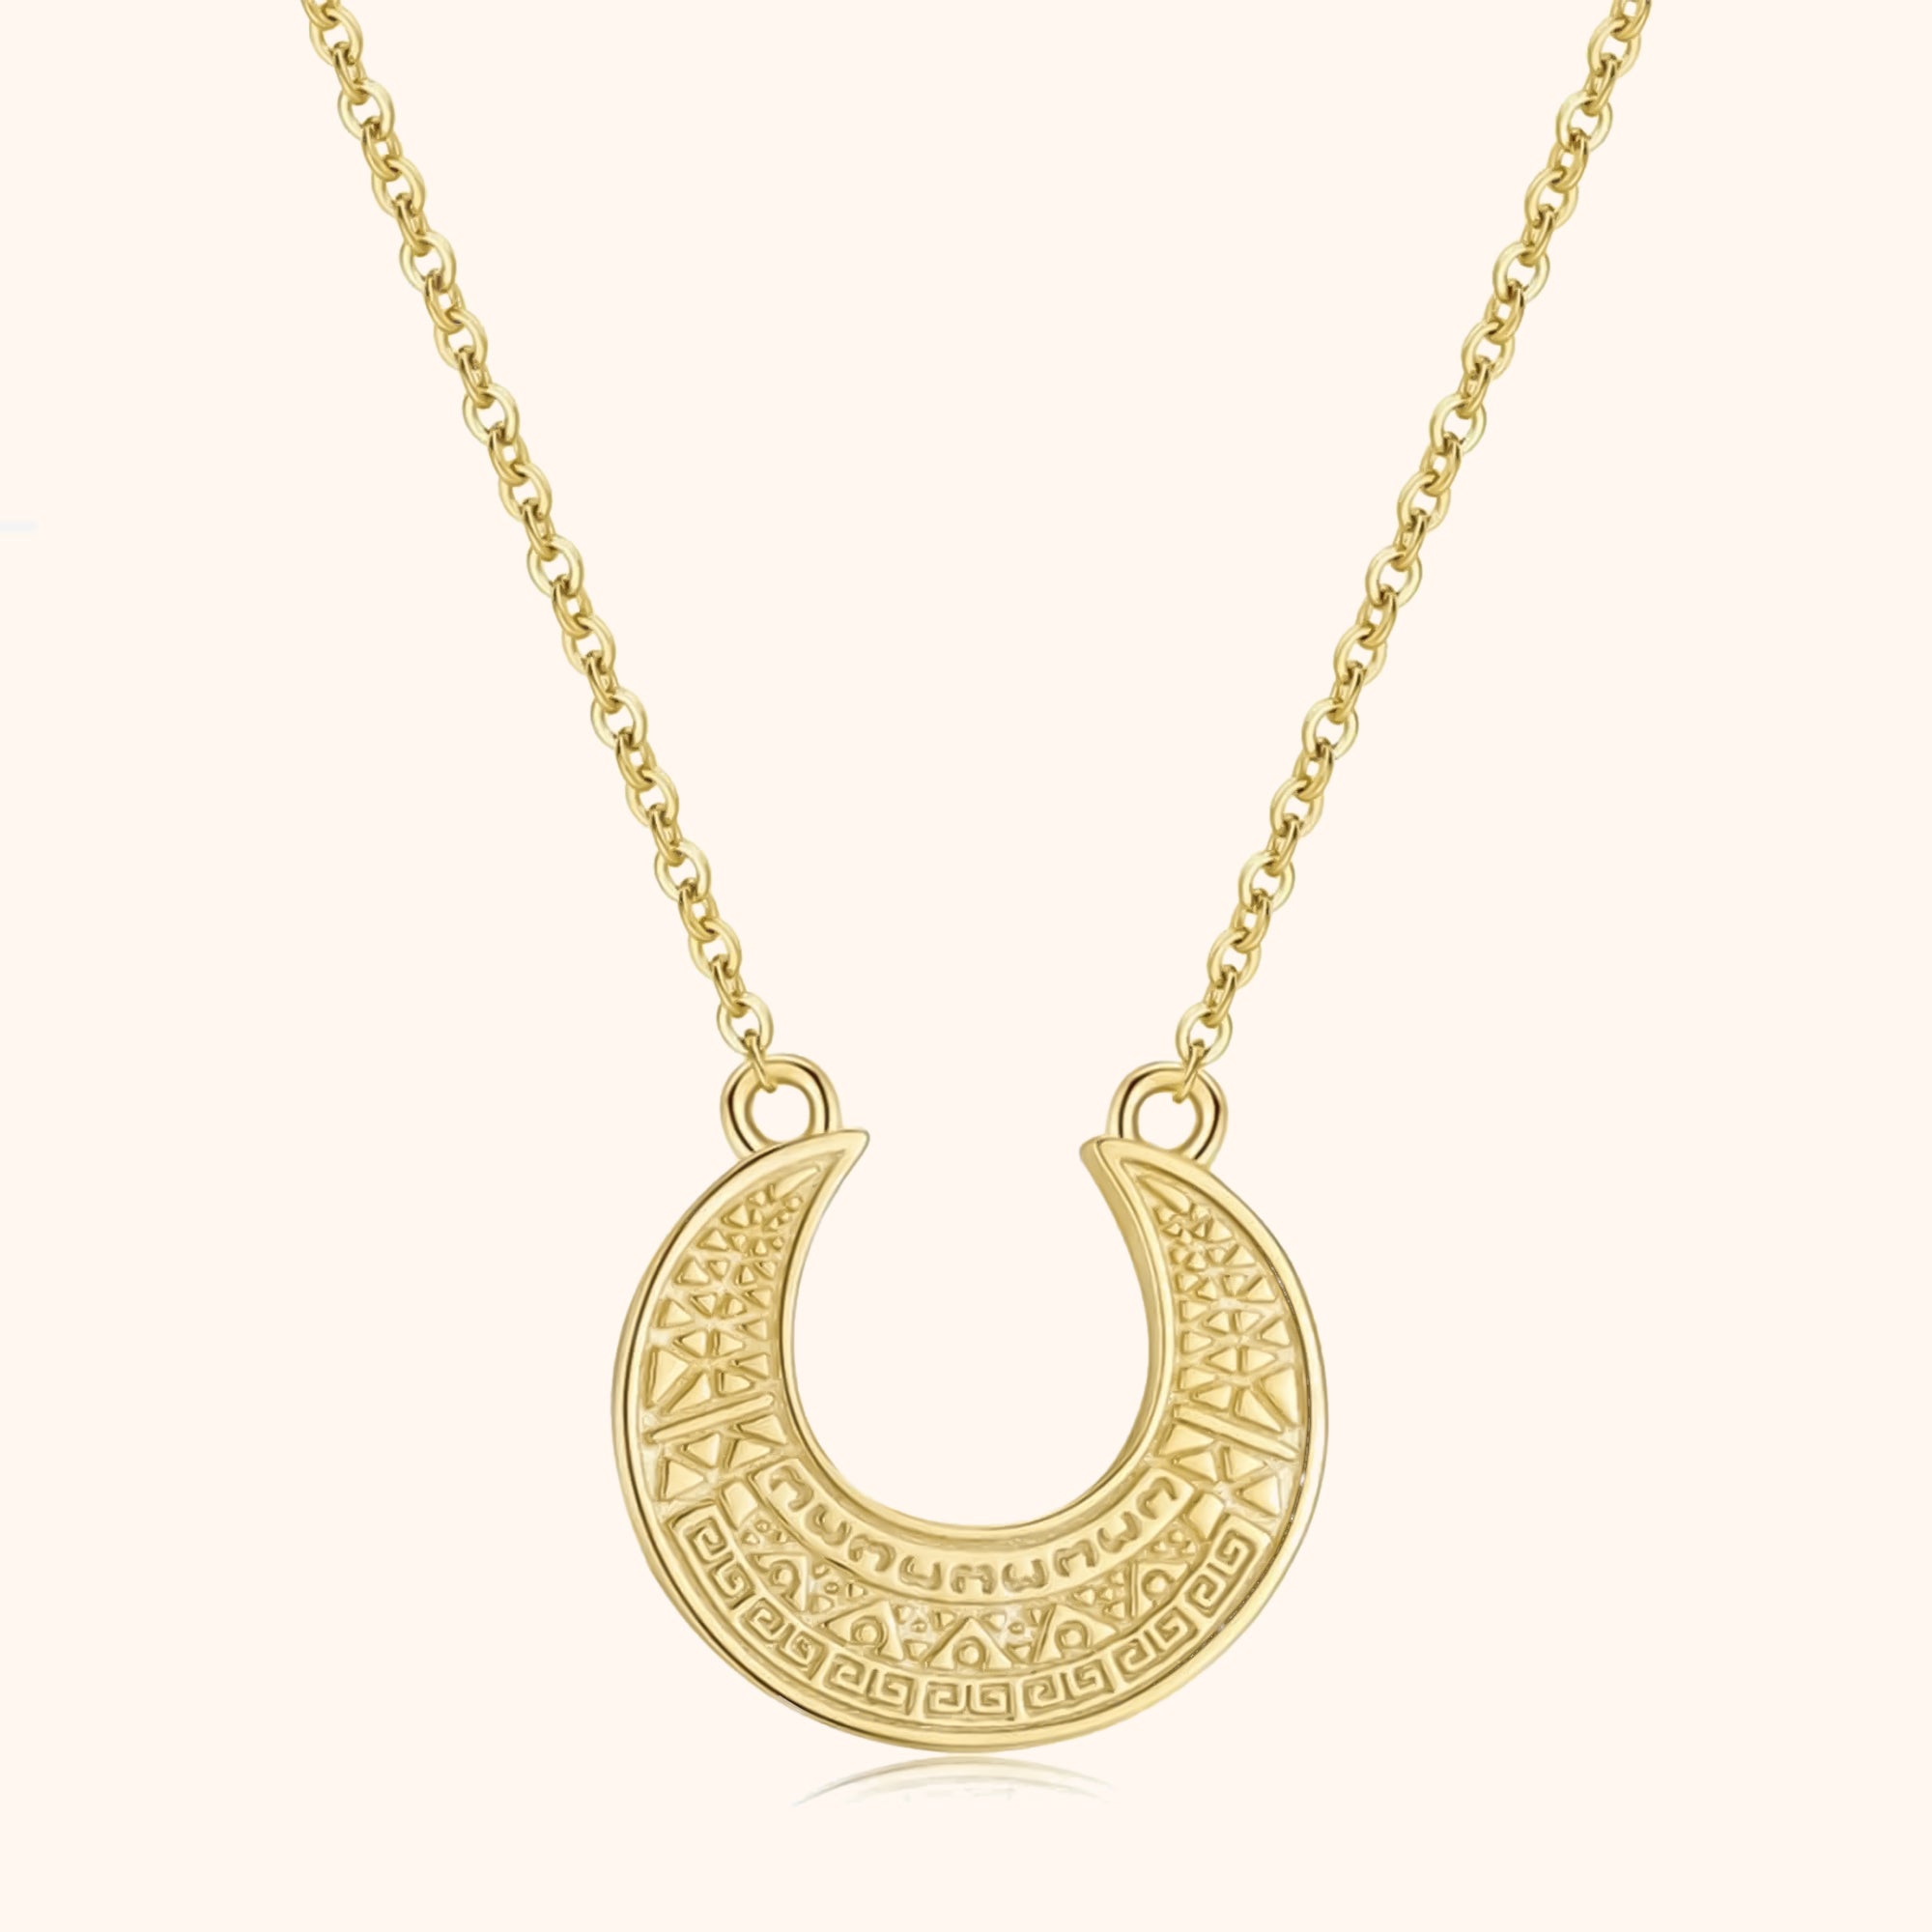 "Moon Necklace" Halskette - Emily Schmuck